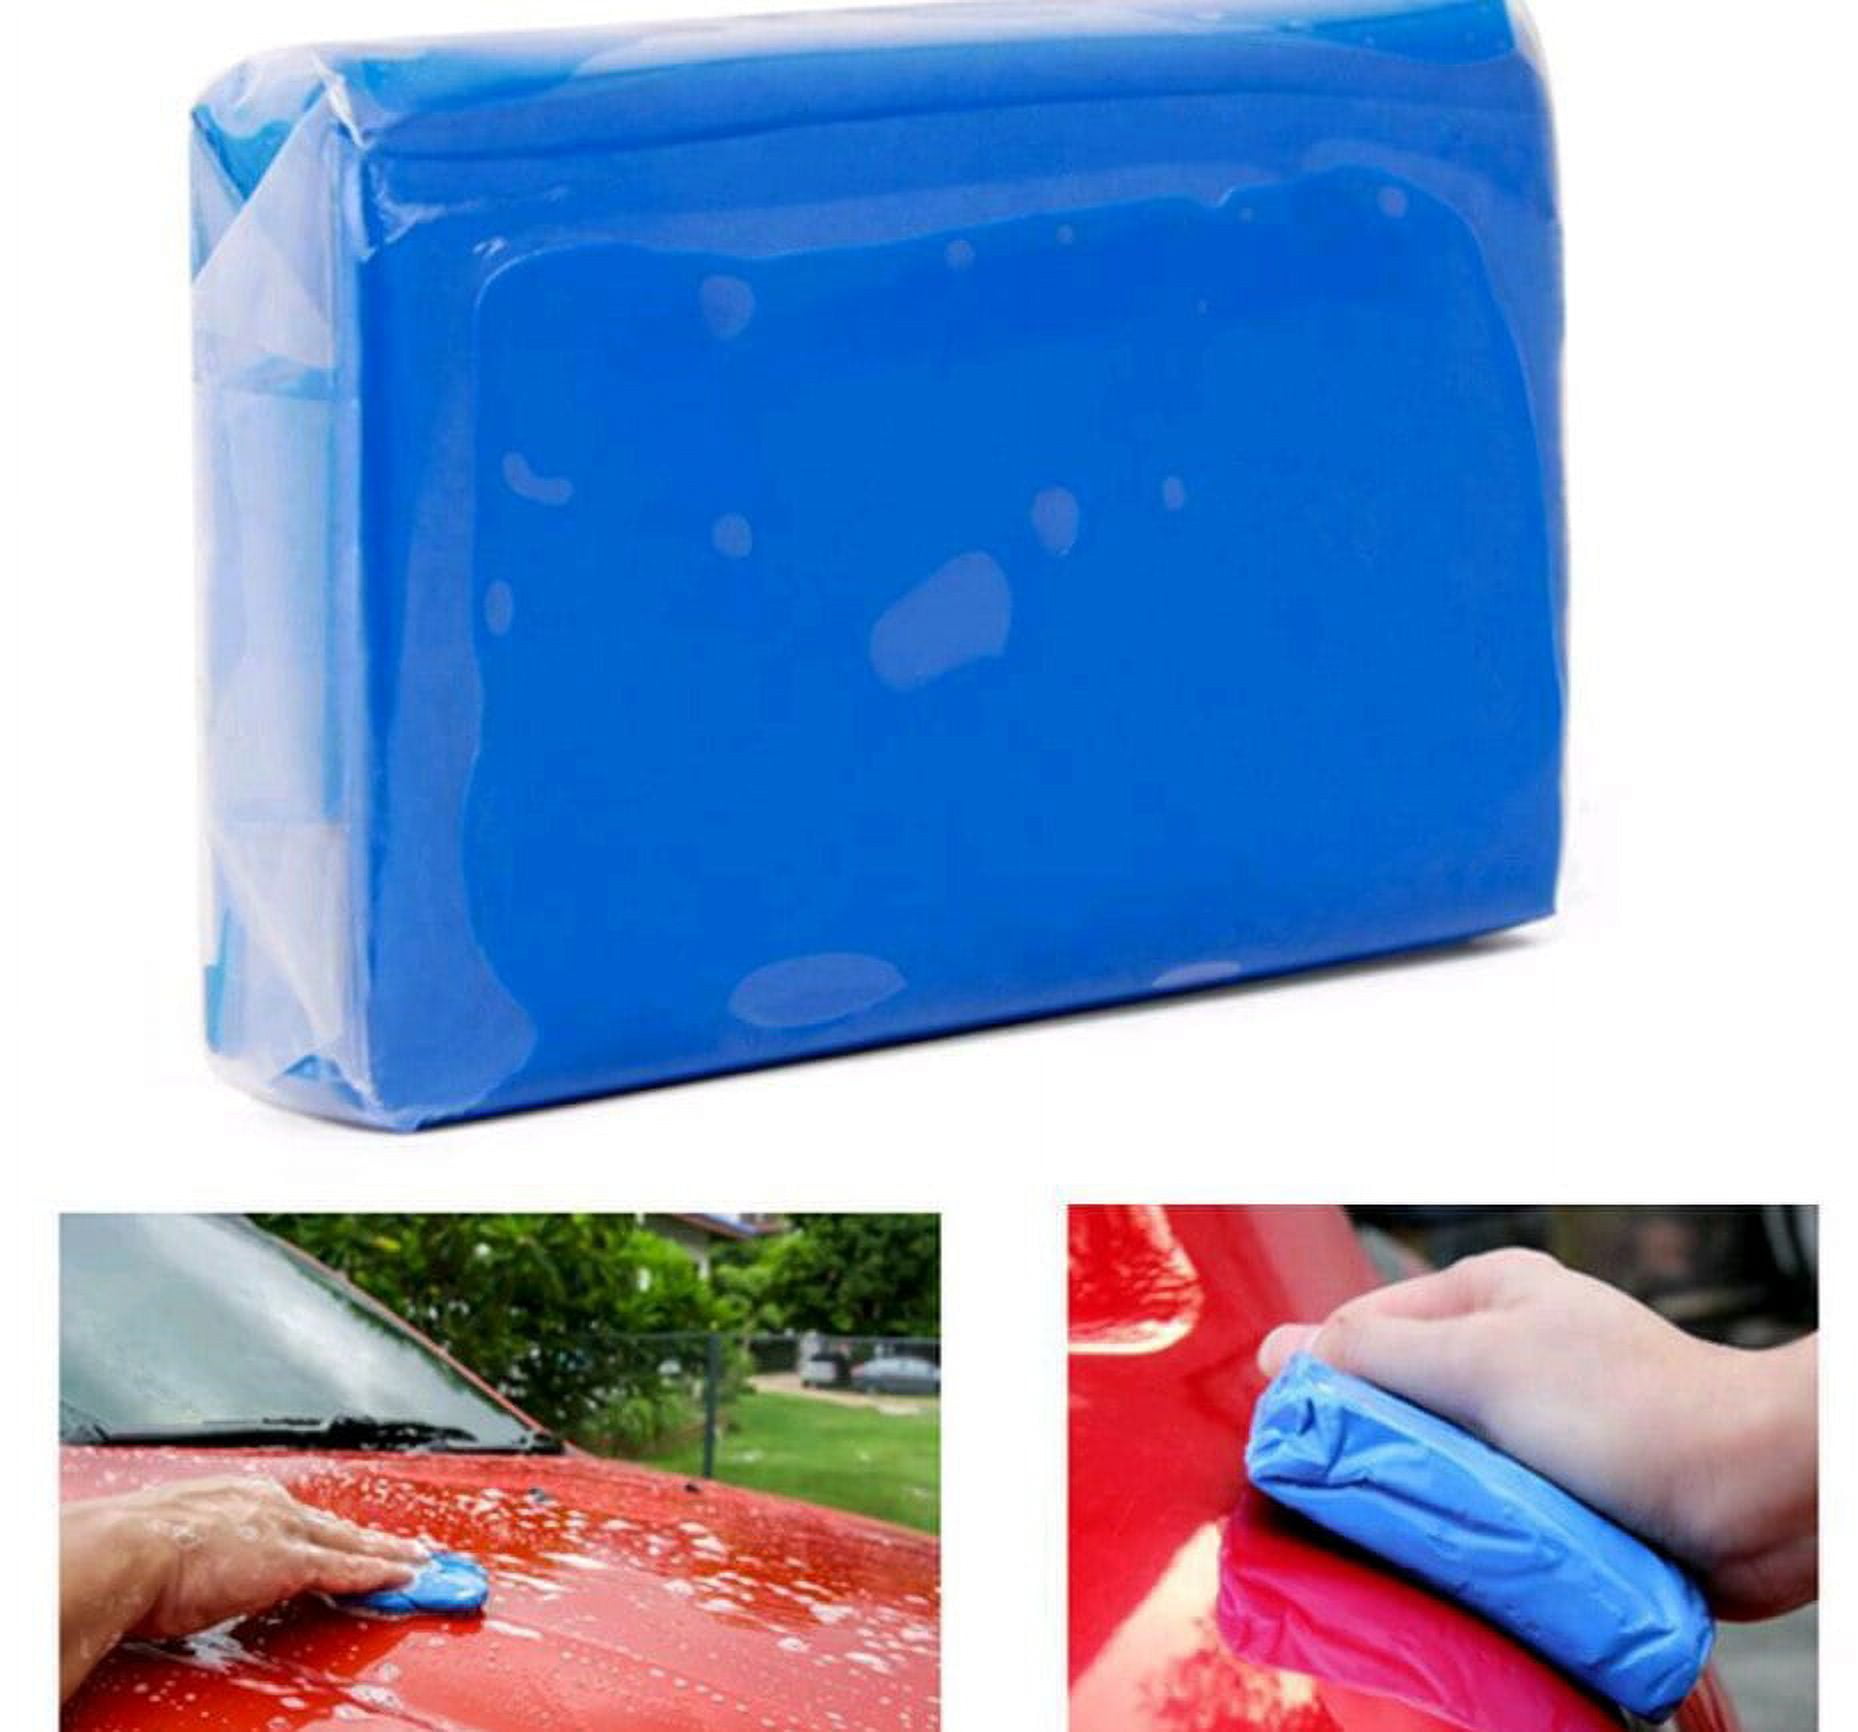  Car Clay Bar 5 Pack 500g, Premium Grade Clay Bars Auto  Detailing Magic Clay Bar Kit with Towel Clay Bar Cleaner with Washing and  Adsorption Capacity for Car Wash Car Detailing